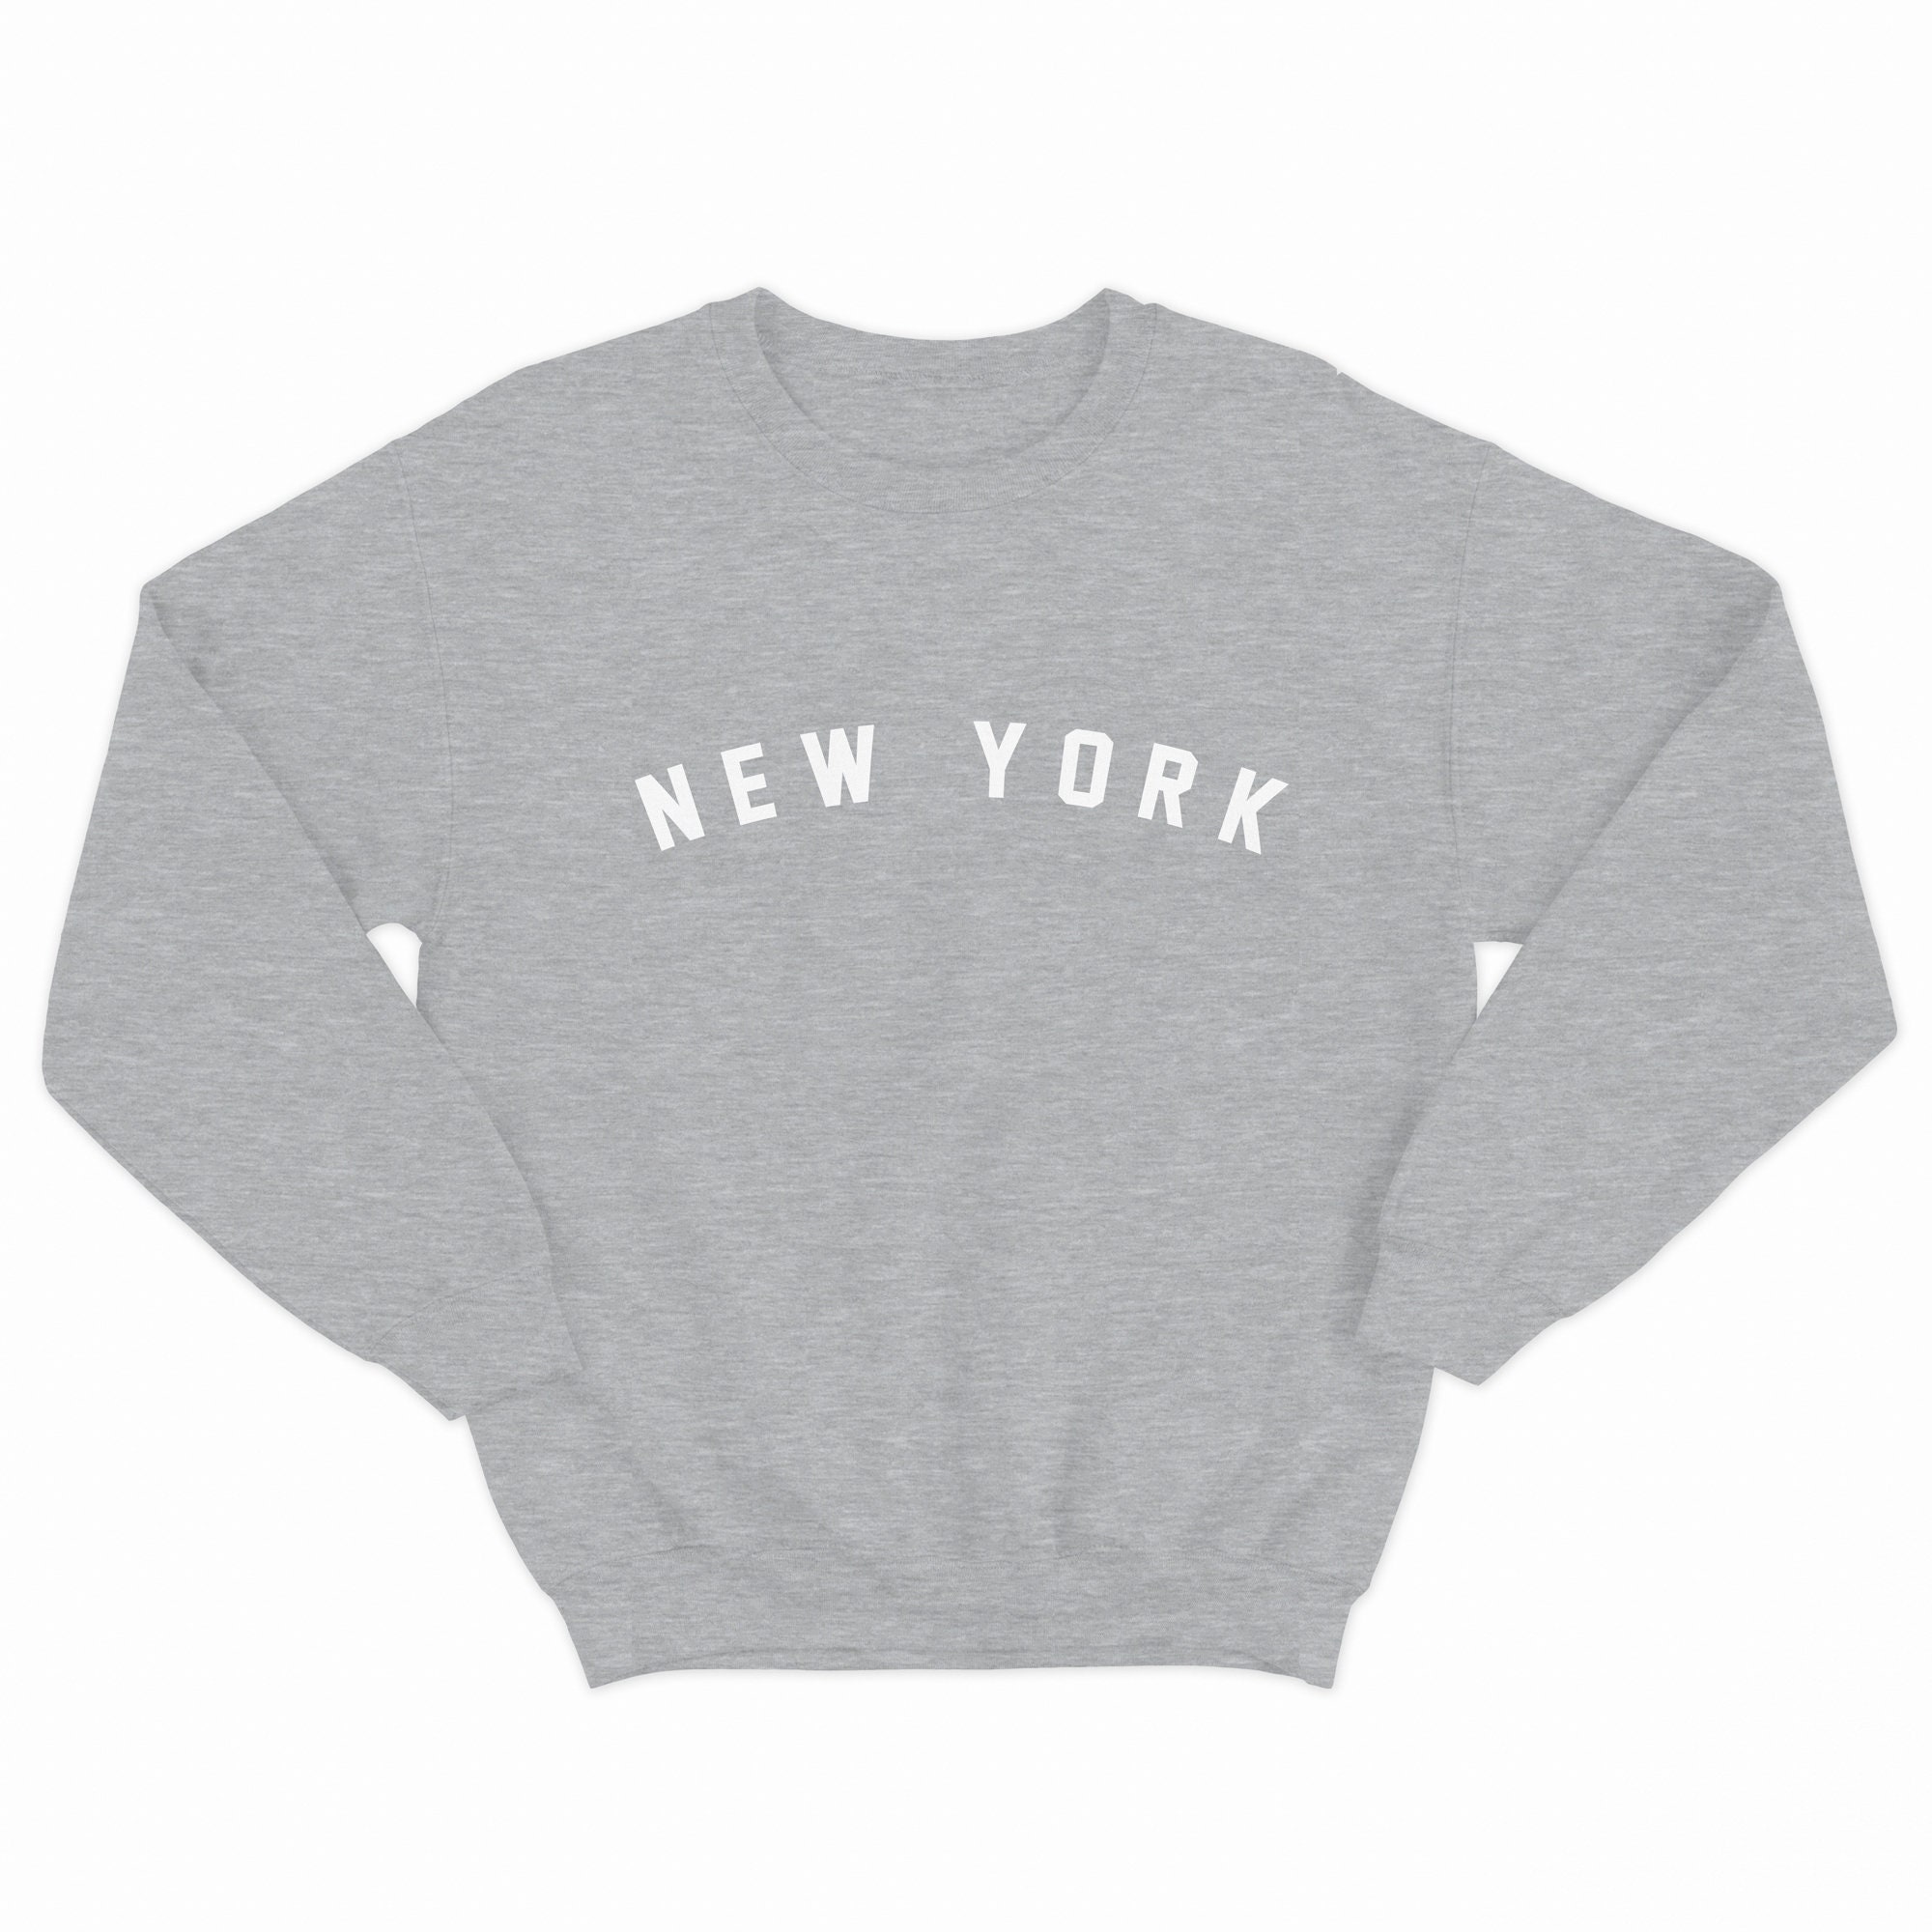 New York Sweater Sweatshirt Jumper Crew Neck Varsity New York - Etsy